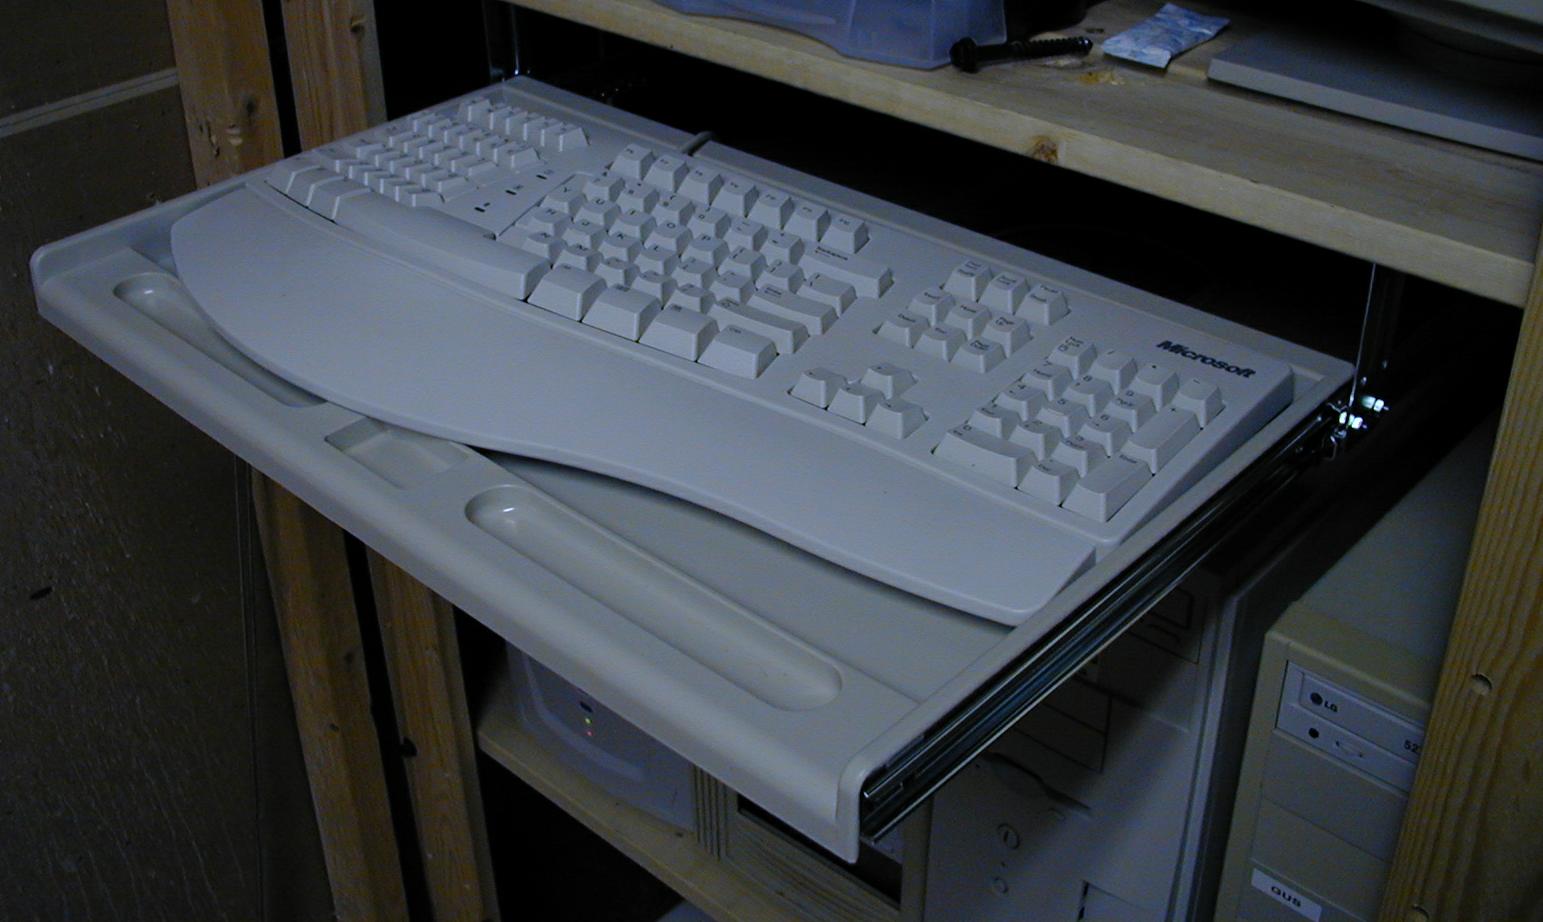 keyboard tray